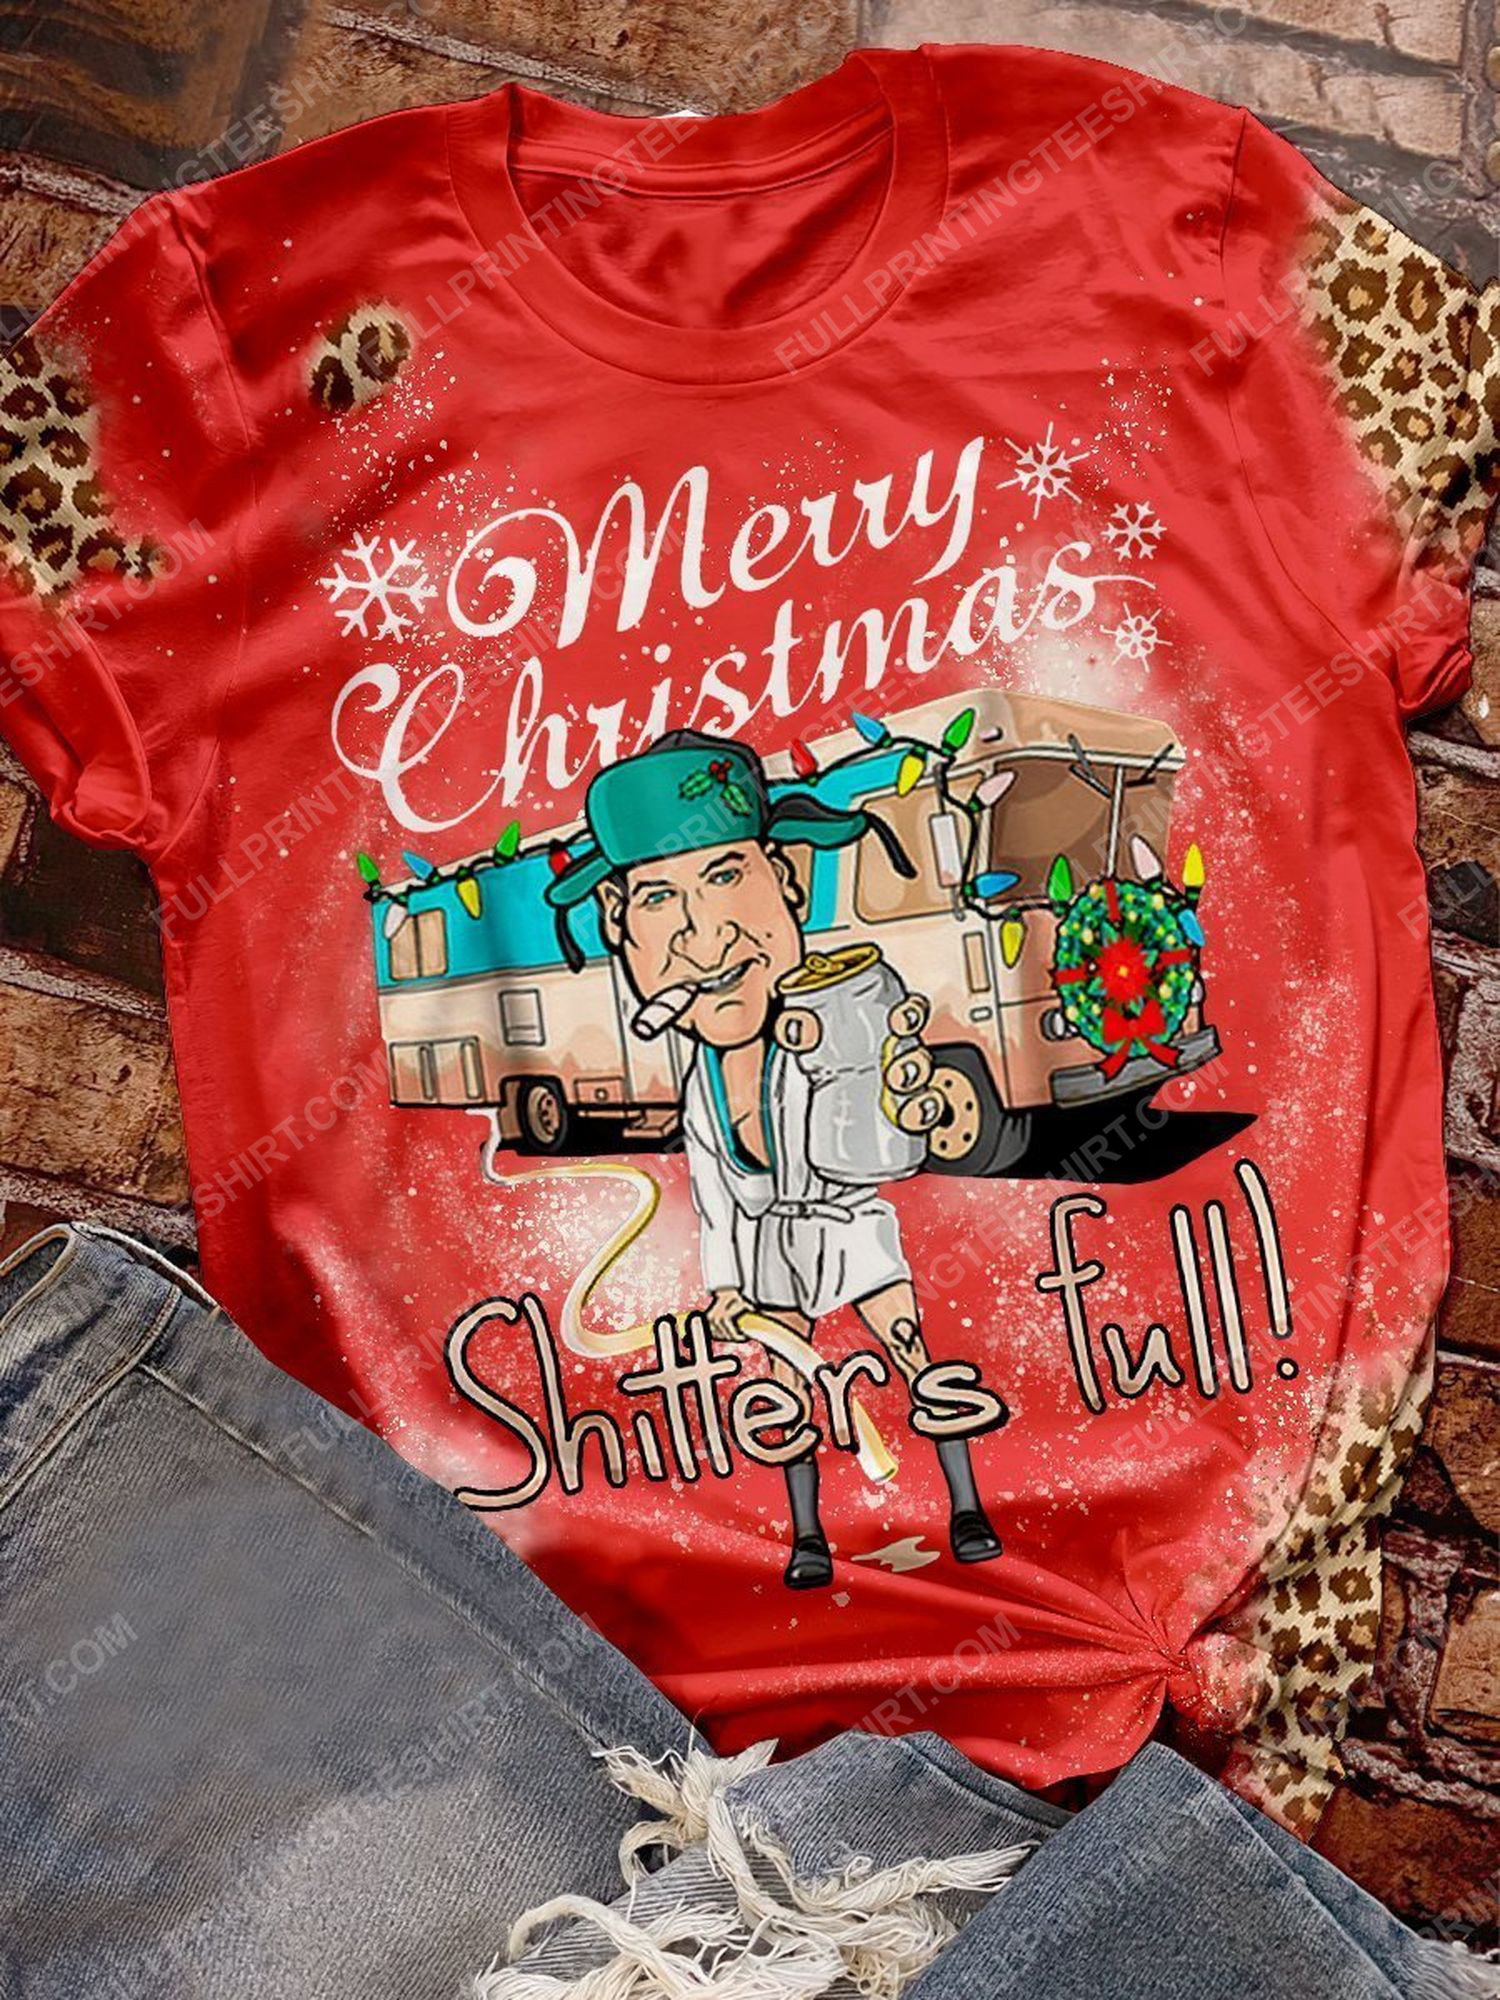 Christmas vacation cousin eddie shitter's full shirt 4